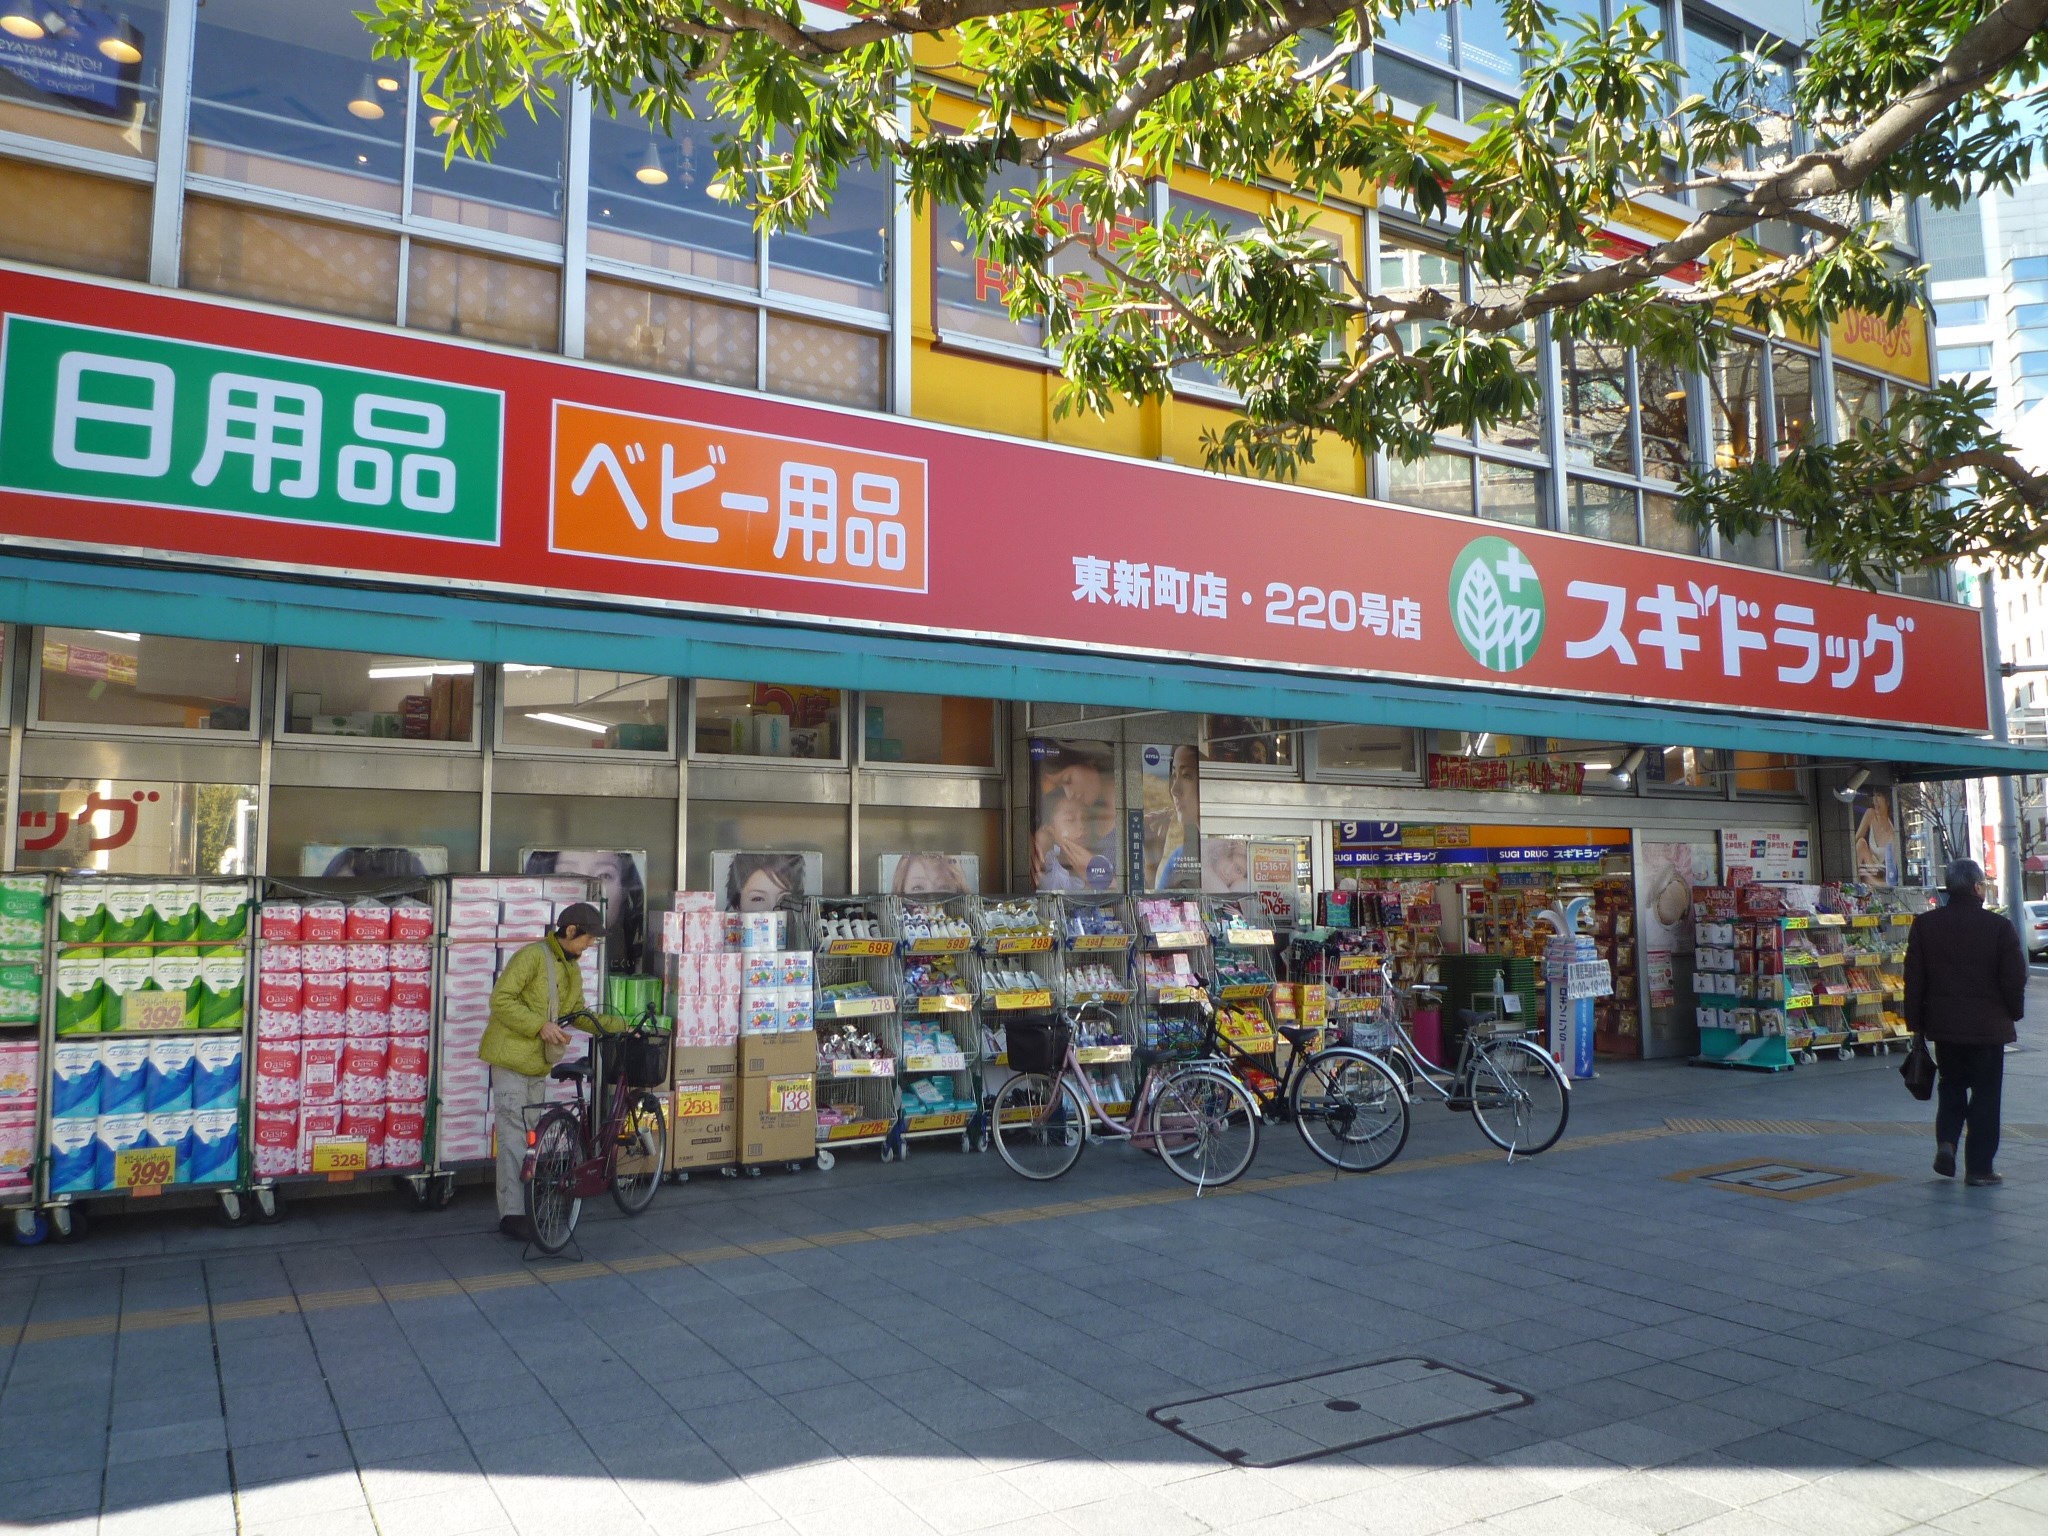 Dorakkusutoa. Cedar pharmacy Tohshin shop 863m until (drugstore)